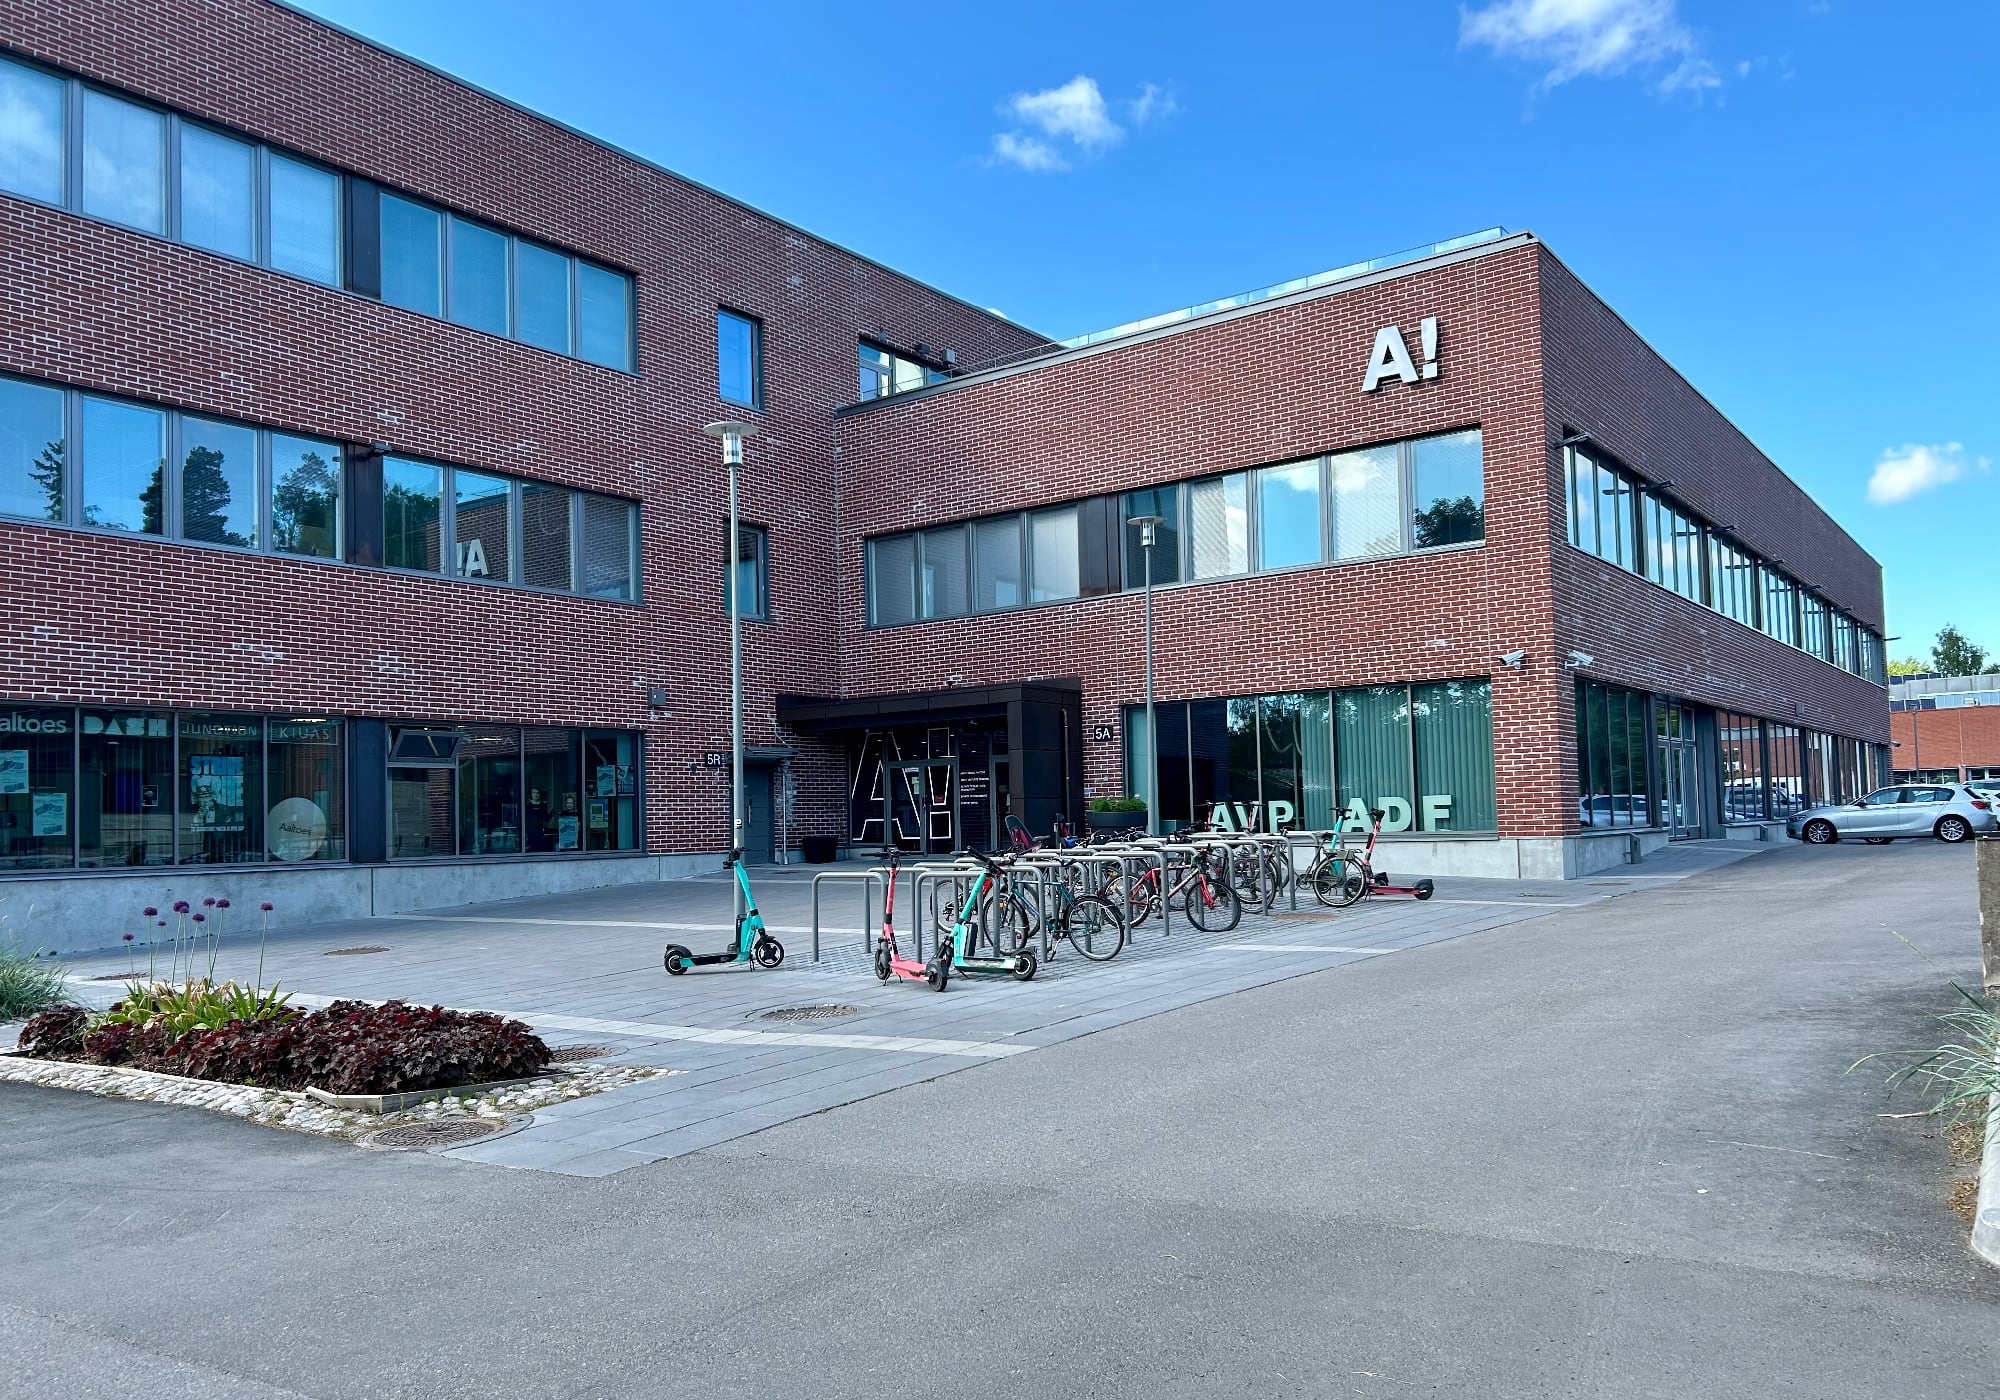 The Aalto Design Factory